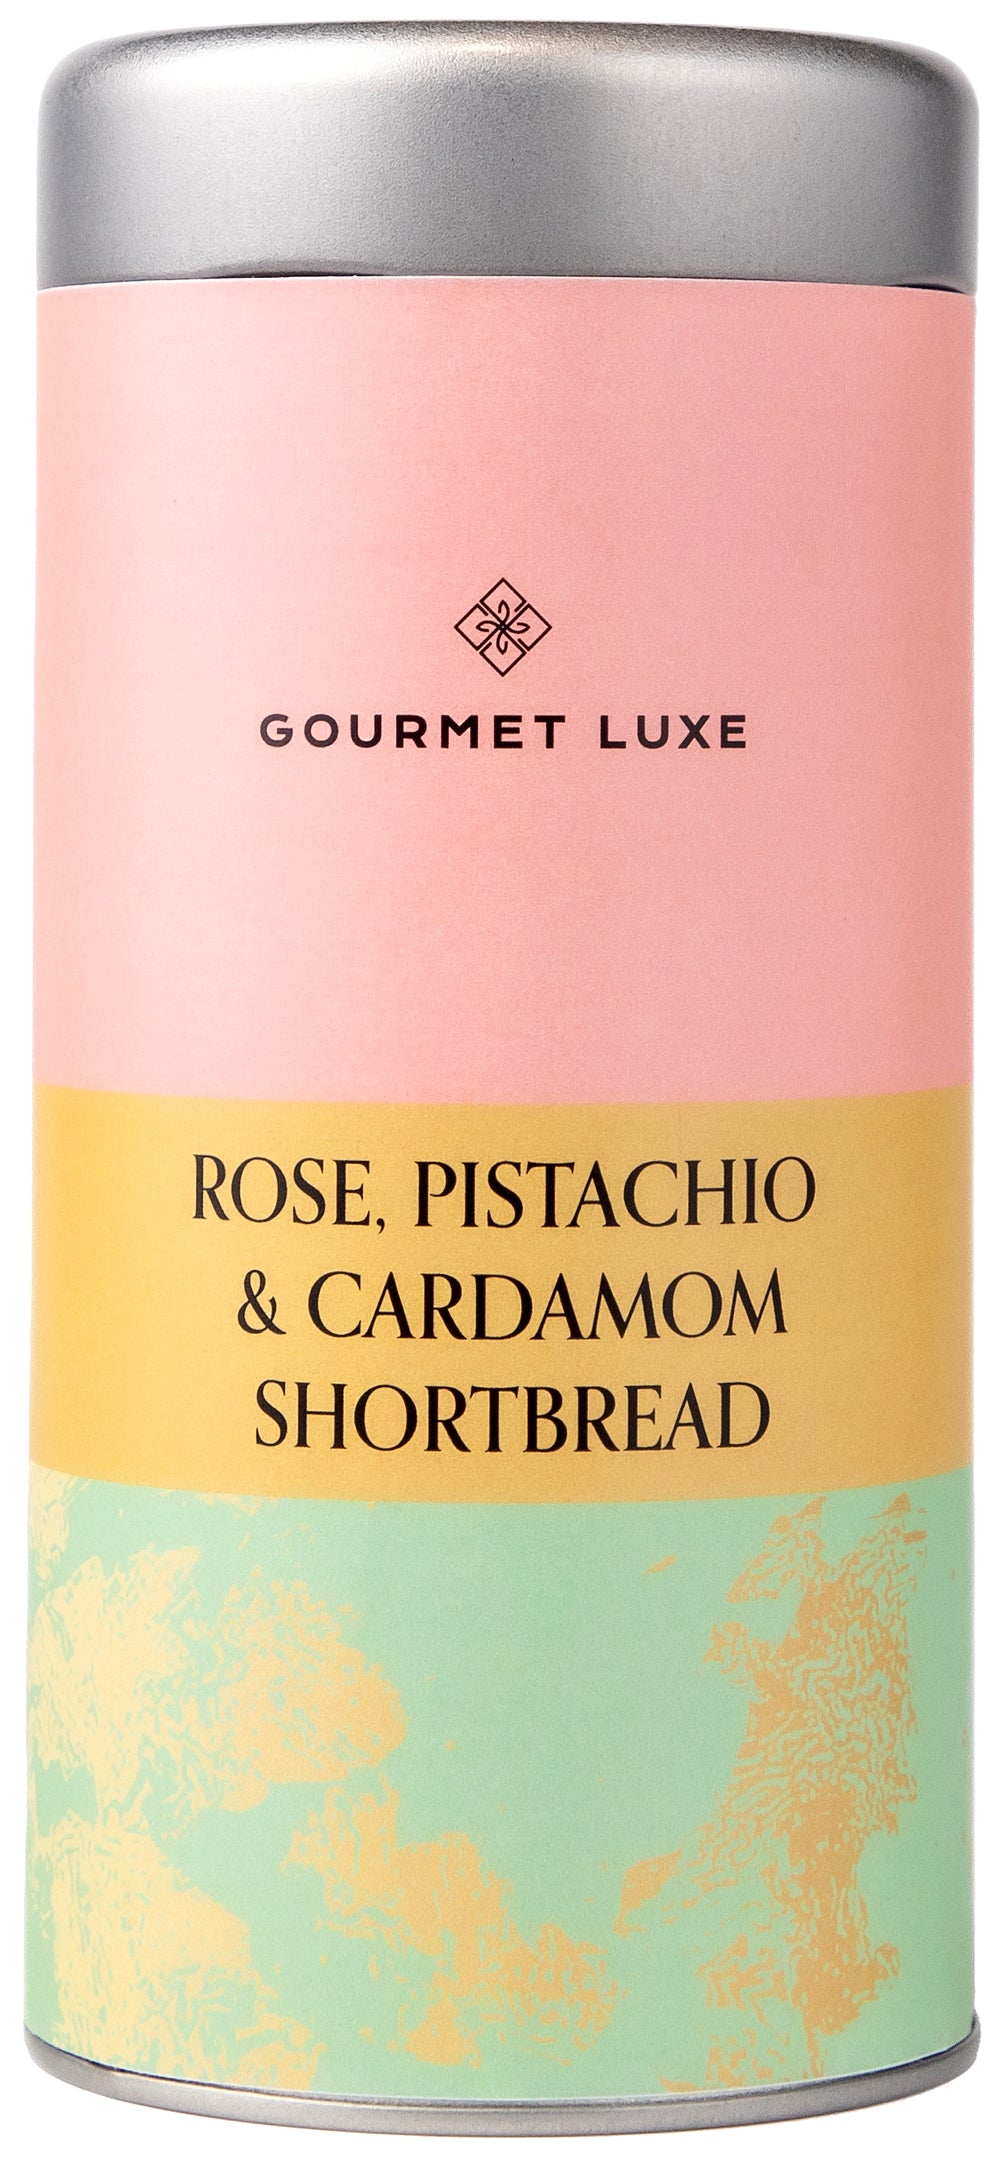 Rose, Pistachio & Cardamom Shortbread